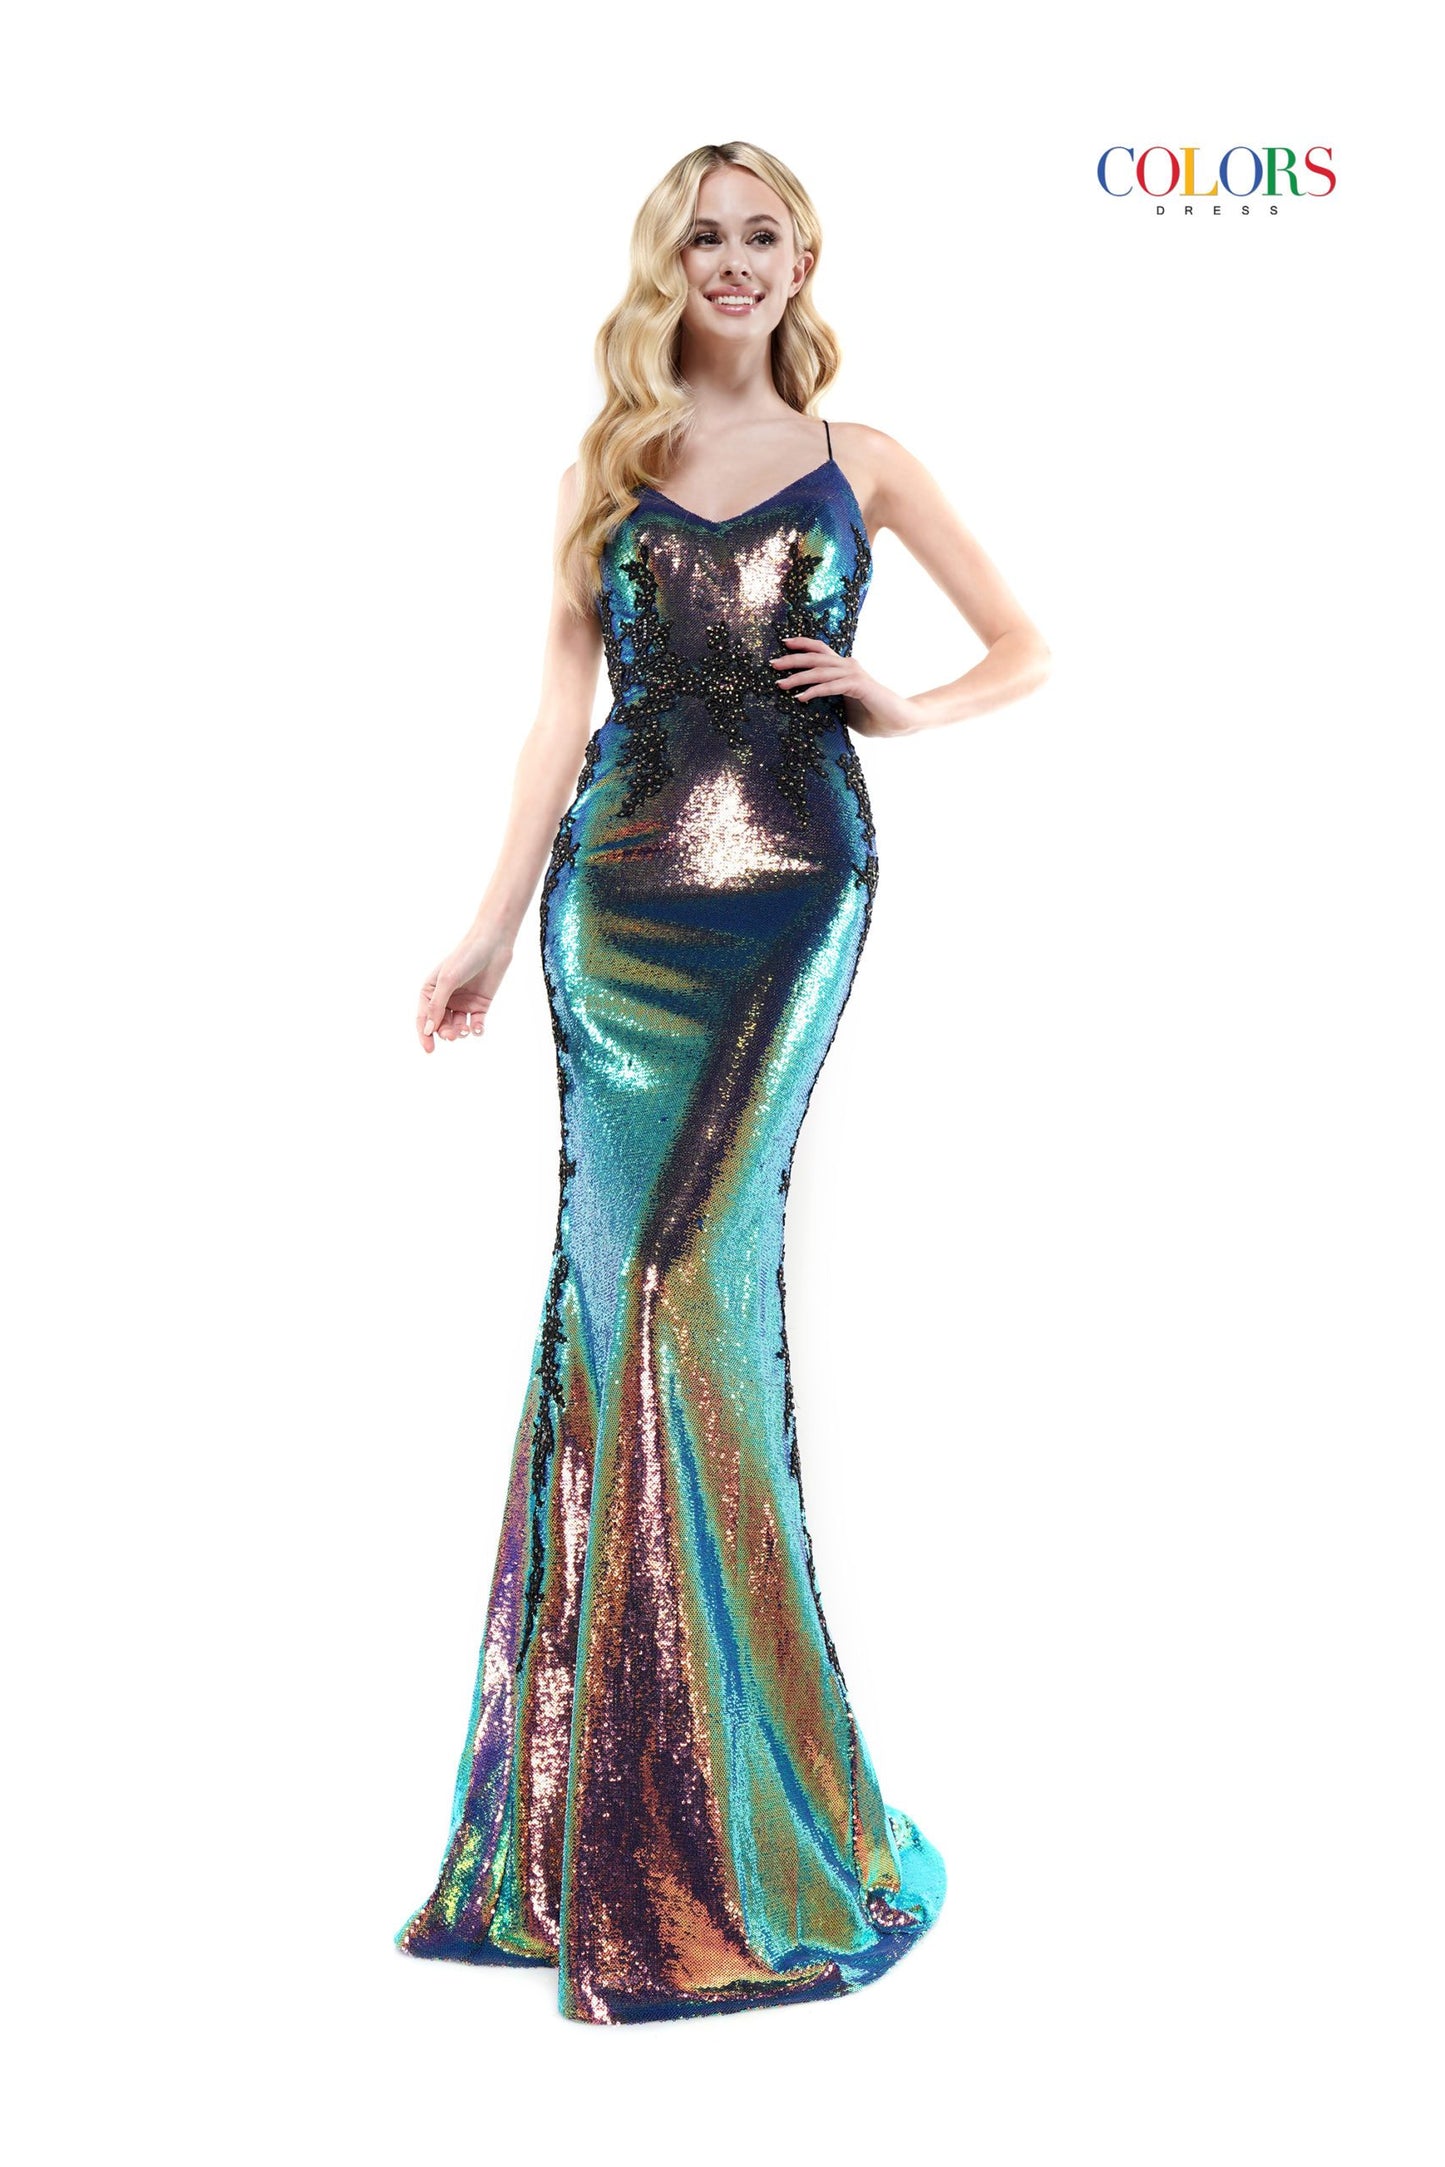 Colors 2519 Size 8 Long Sequin Lace Backless Corset Formal Dress Prom Pageant Plus Size